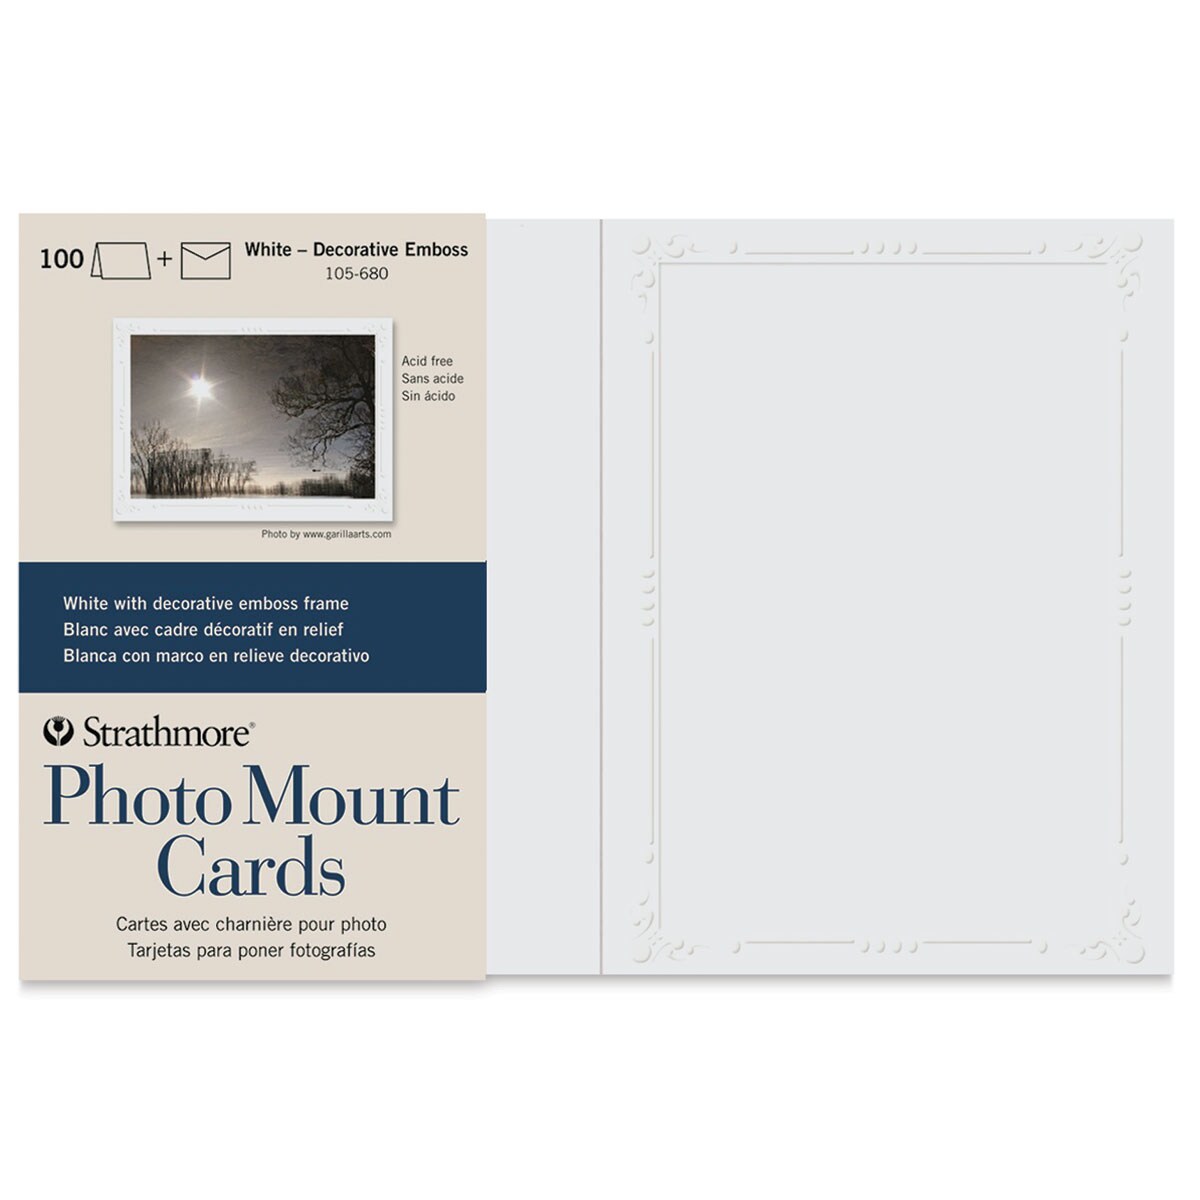 Strathmore Photo Mount Cards and Envelopes - White, Decorative Emboss, Pkg of 100